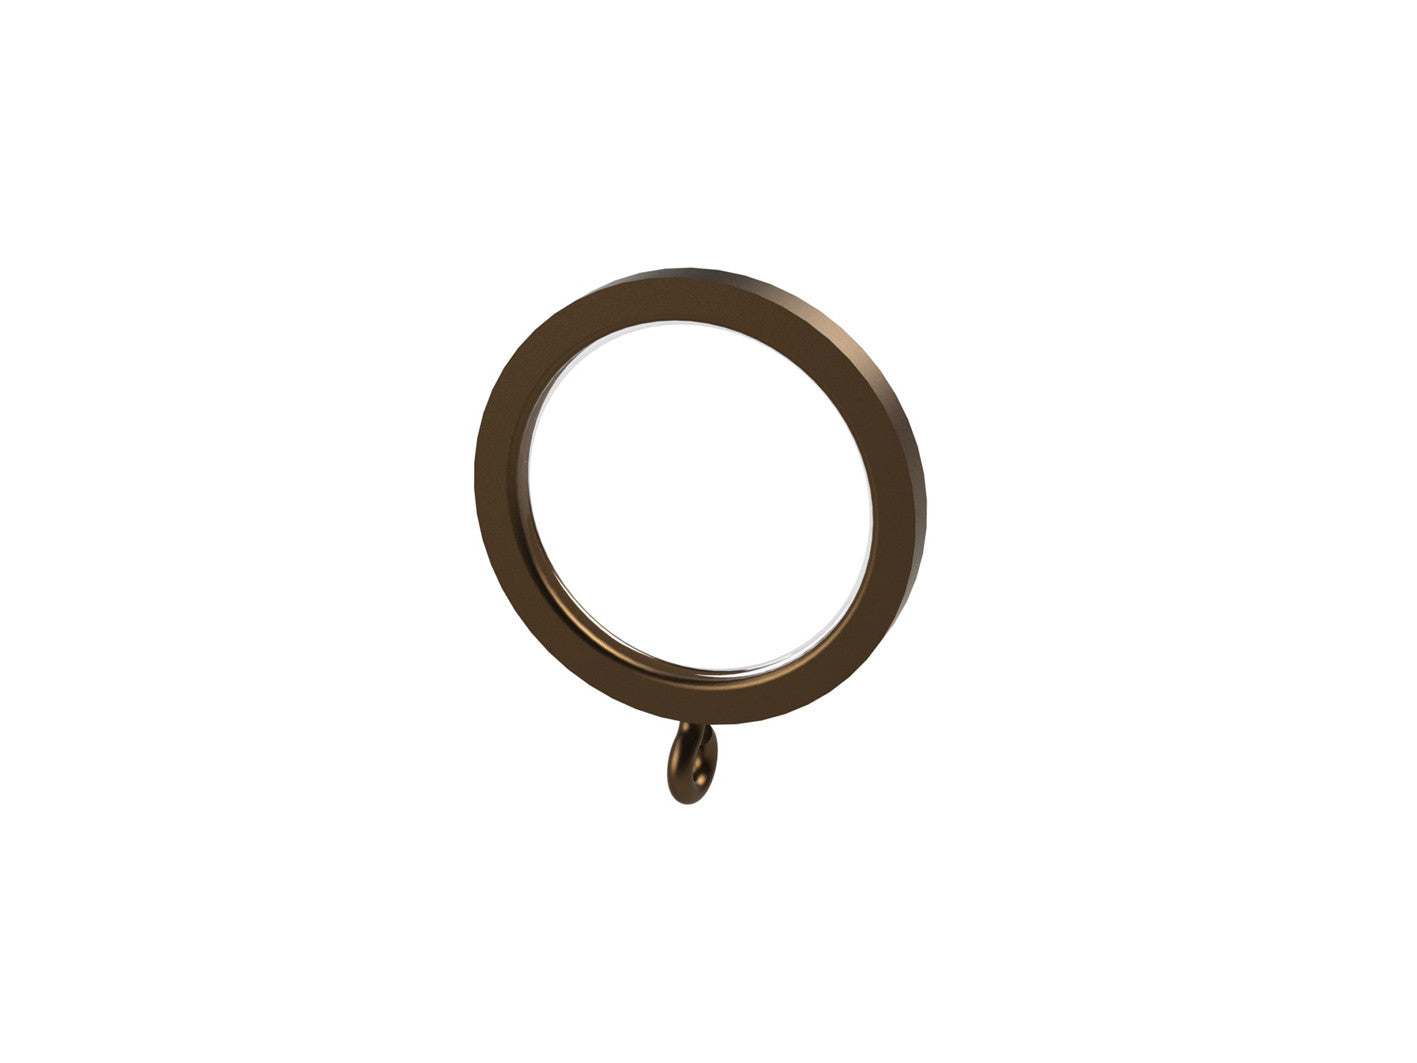 30mm bronze ring